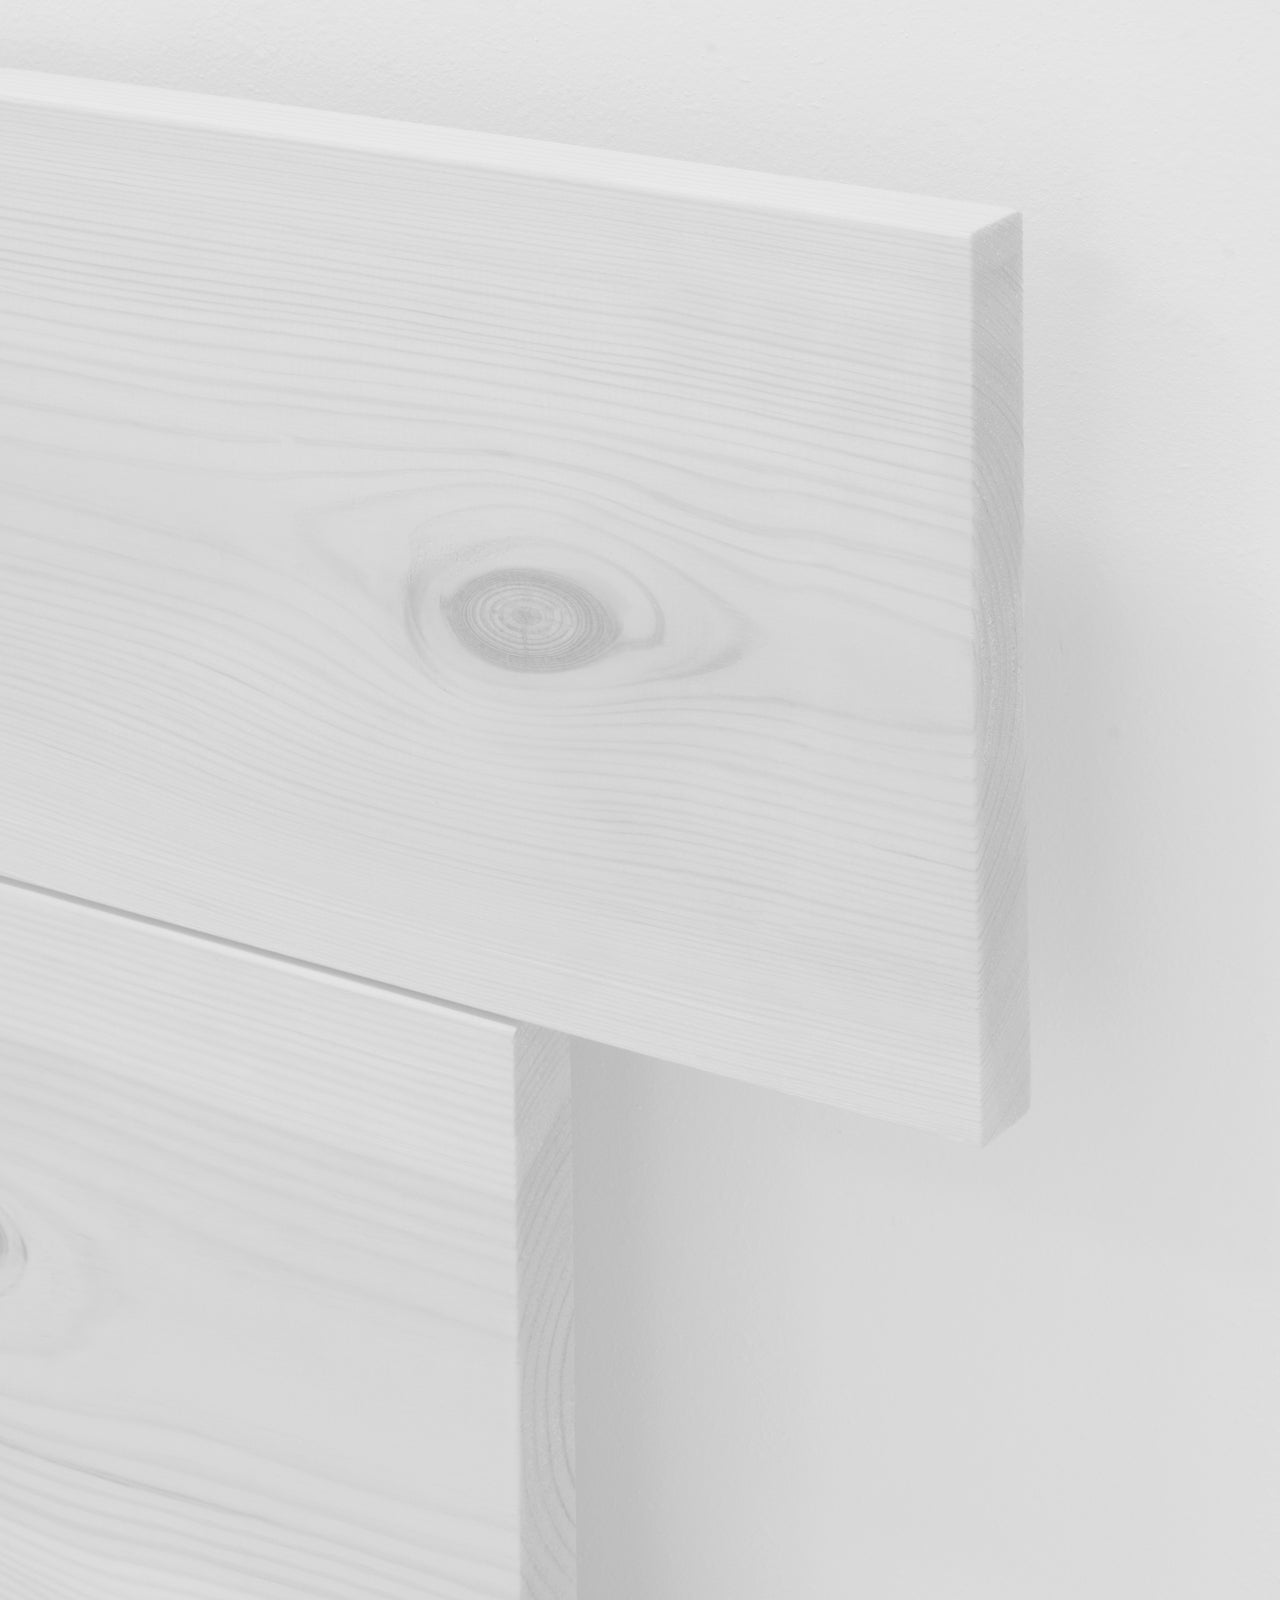 Cabecero de madera maciza en tono blanco de 120x60cm - DECOWOOD